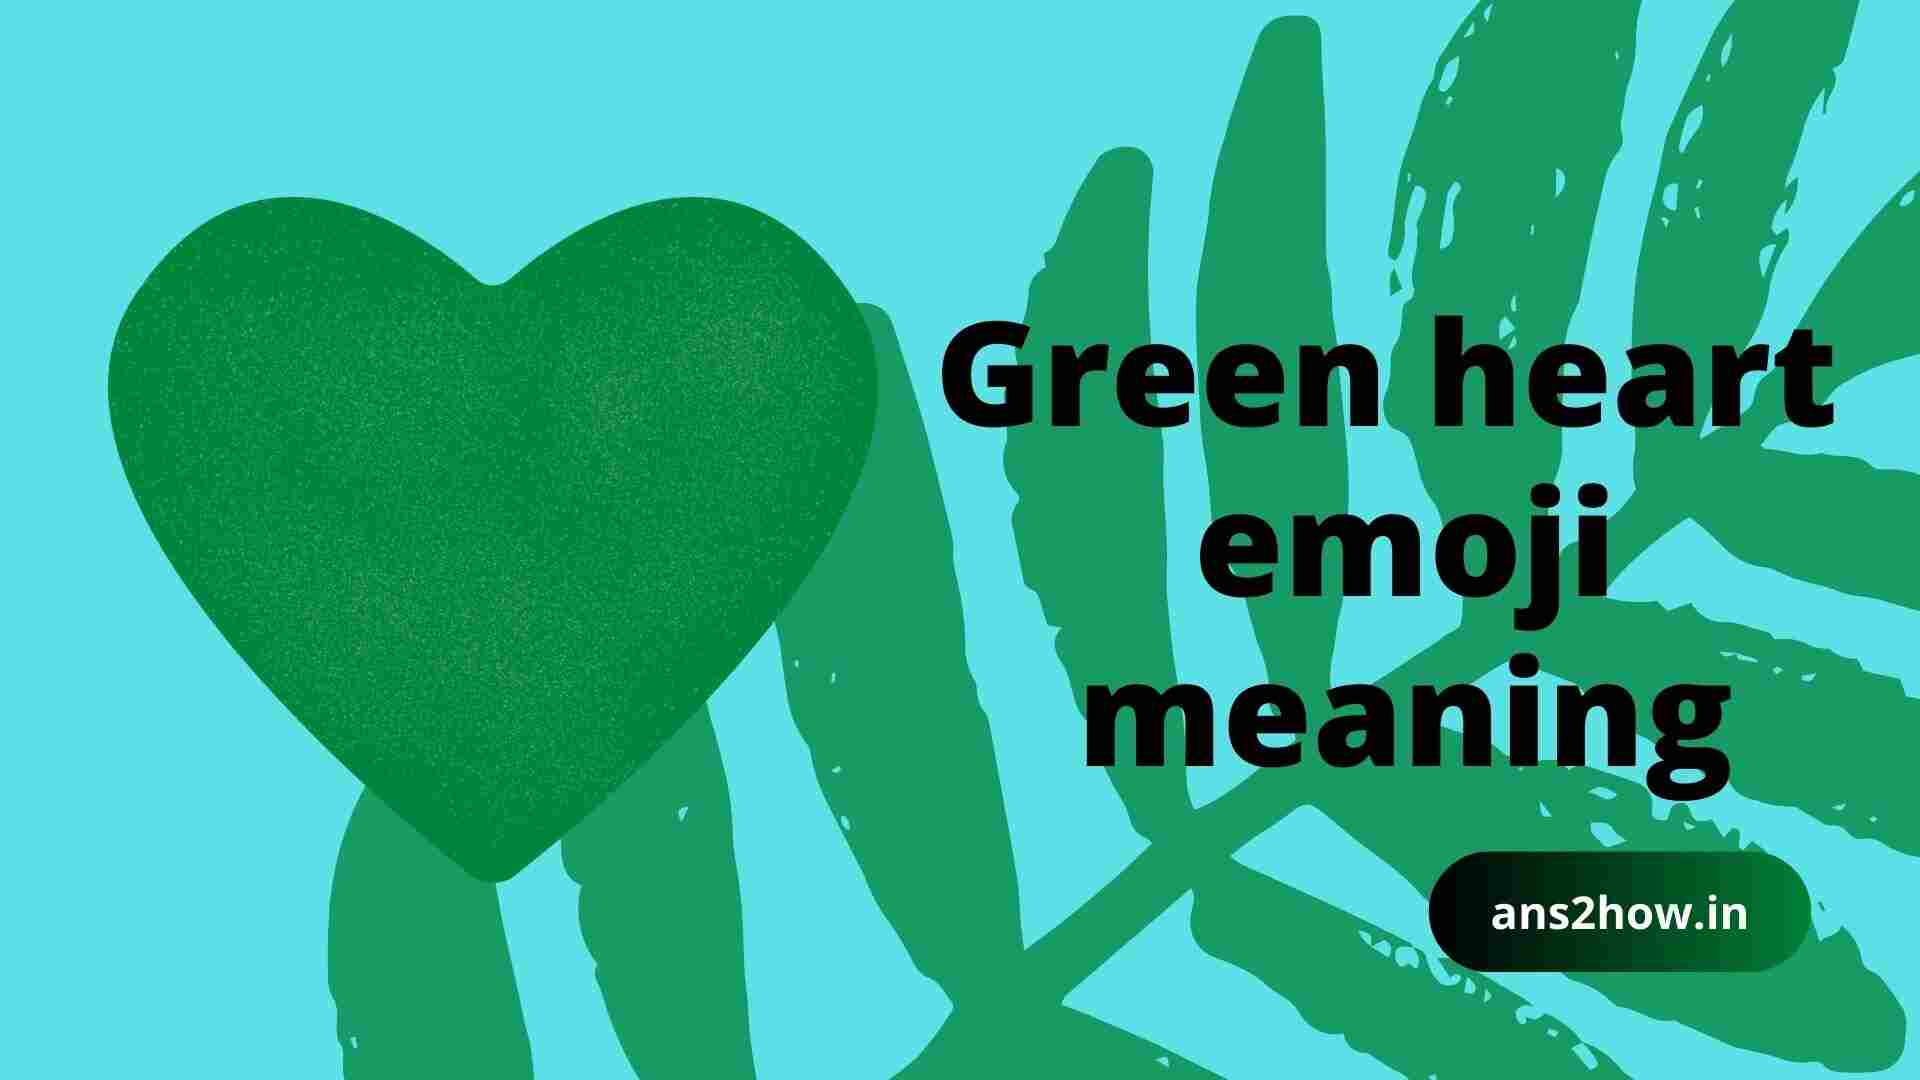 Green heart emoji meaning